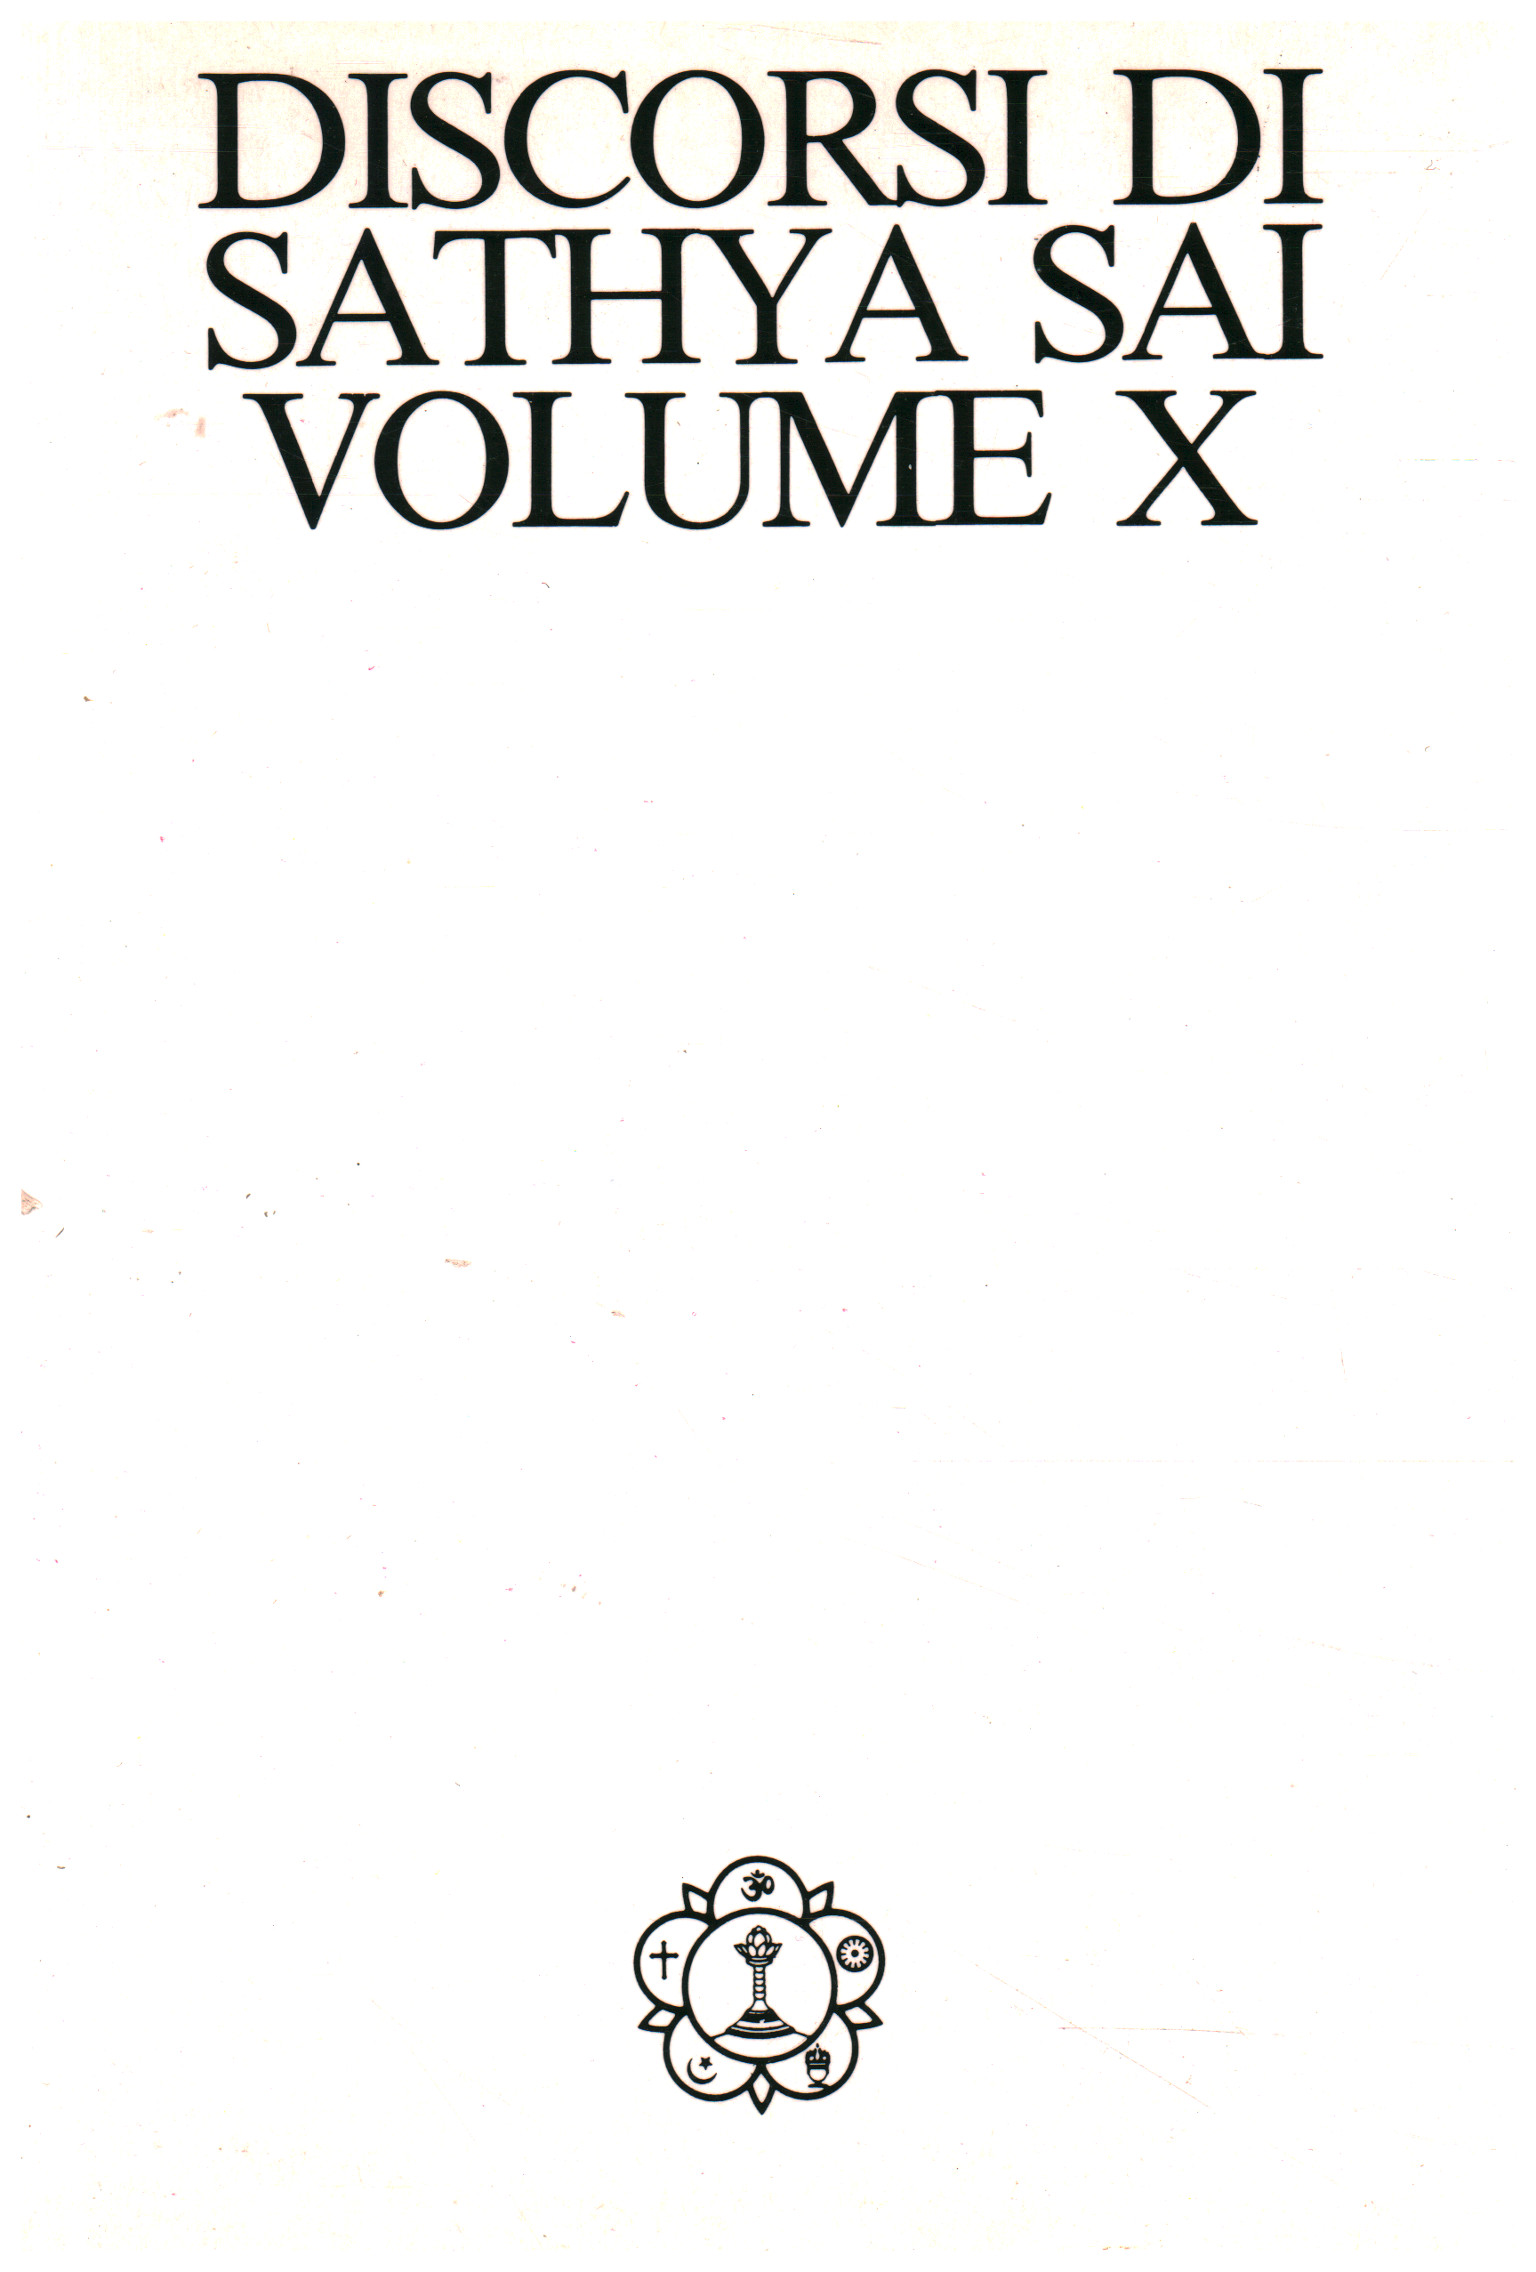 Discourses of Sathya Sai Volume X, sa.